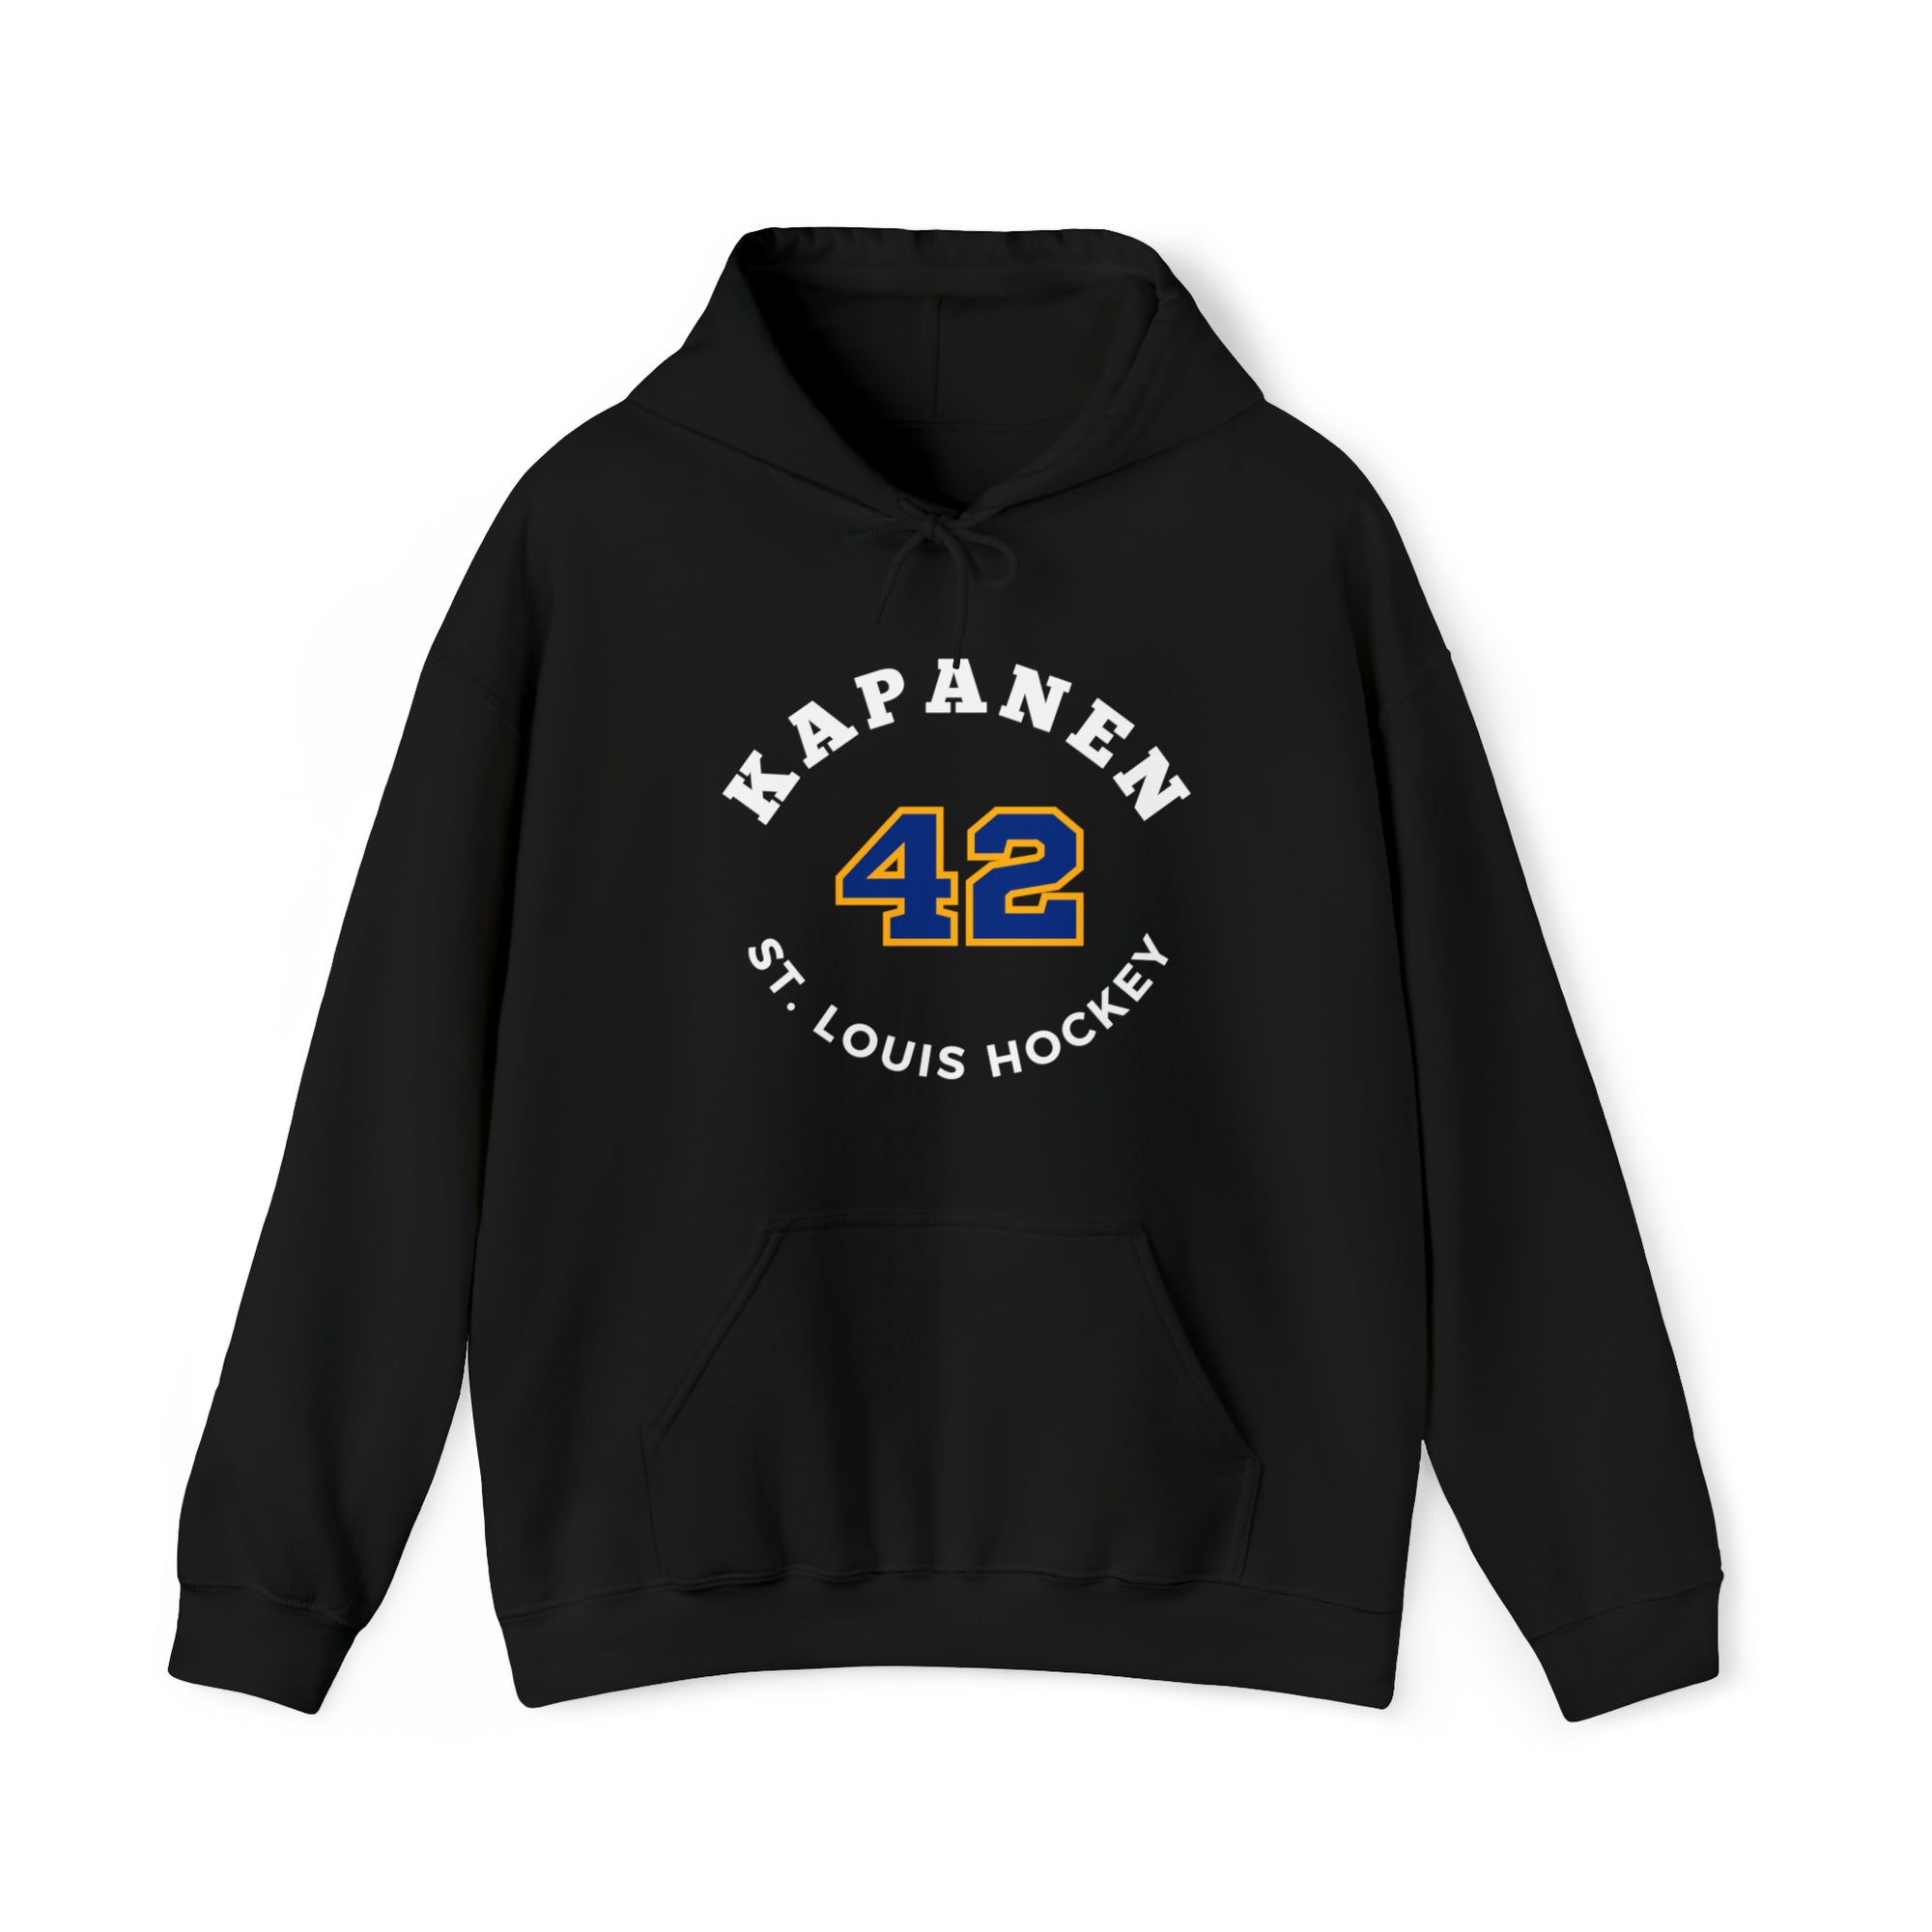 Kapanen 42 St. Louis Hockey Number Arch Design Unisex Hooded Sweatshirt